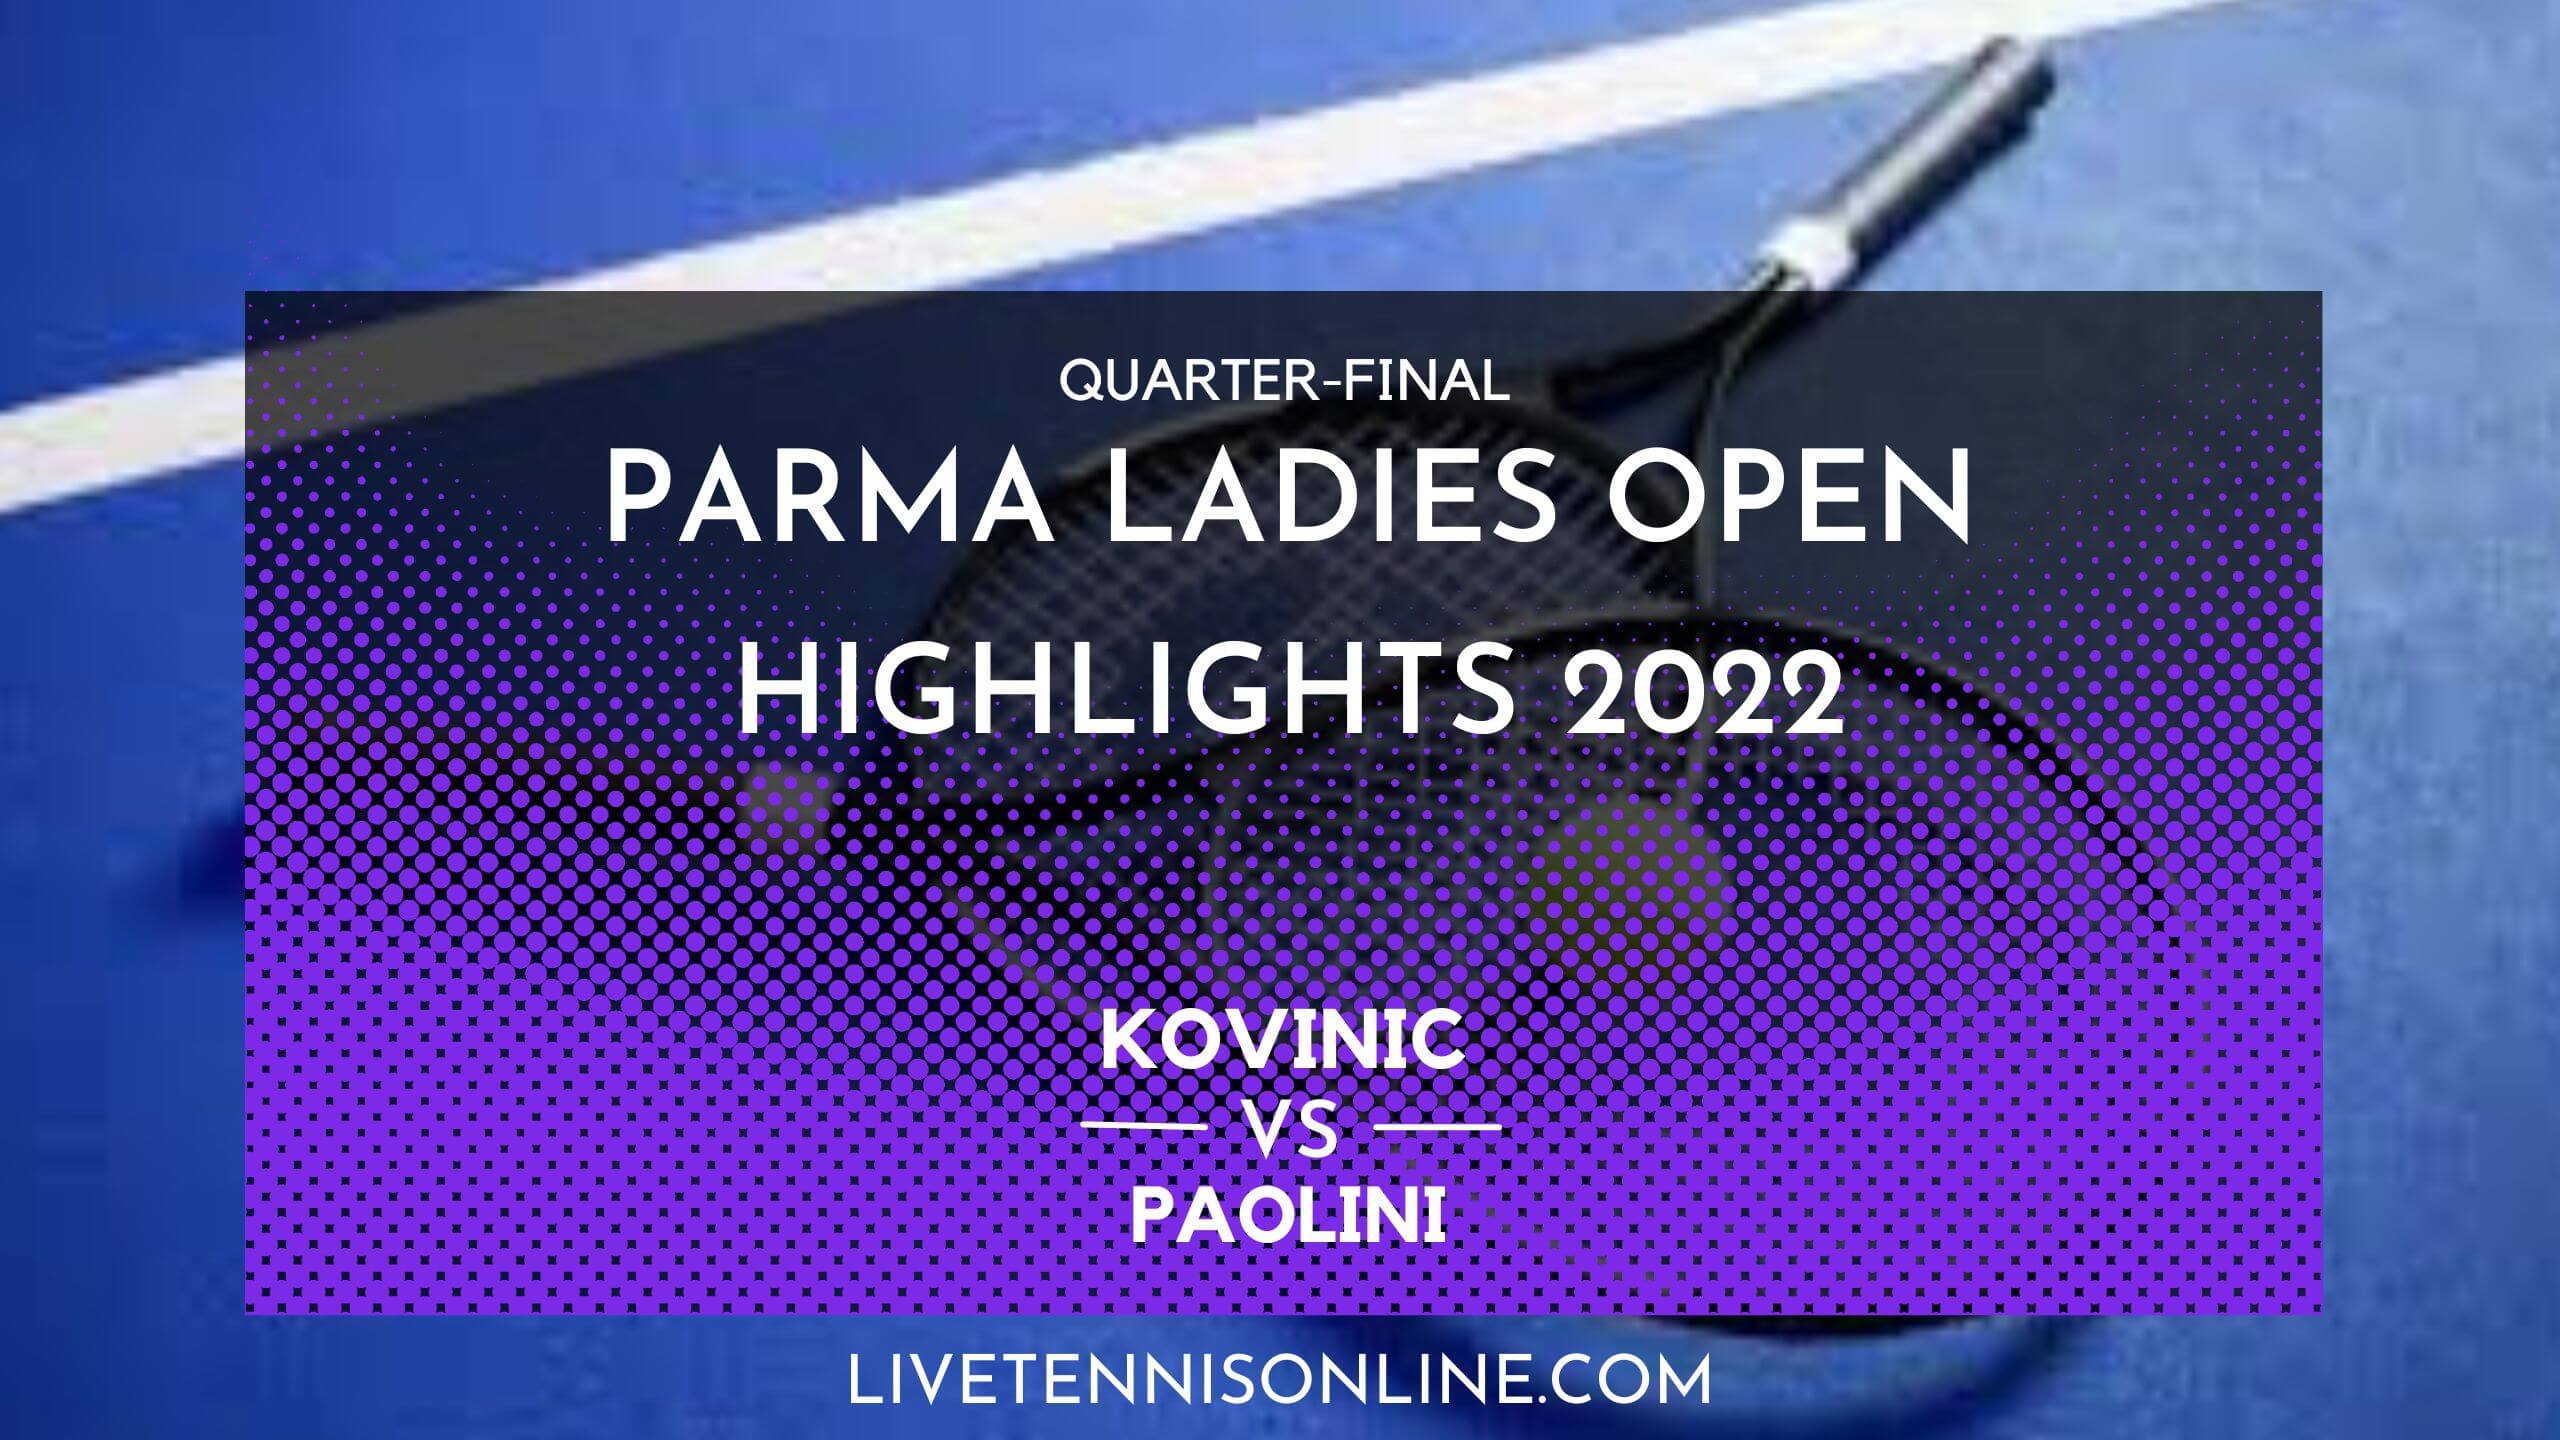 Kovinic Vs Paolini QF Highlights 2022 Parma Ladies Open